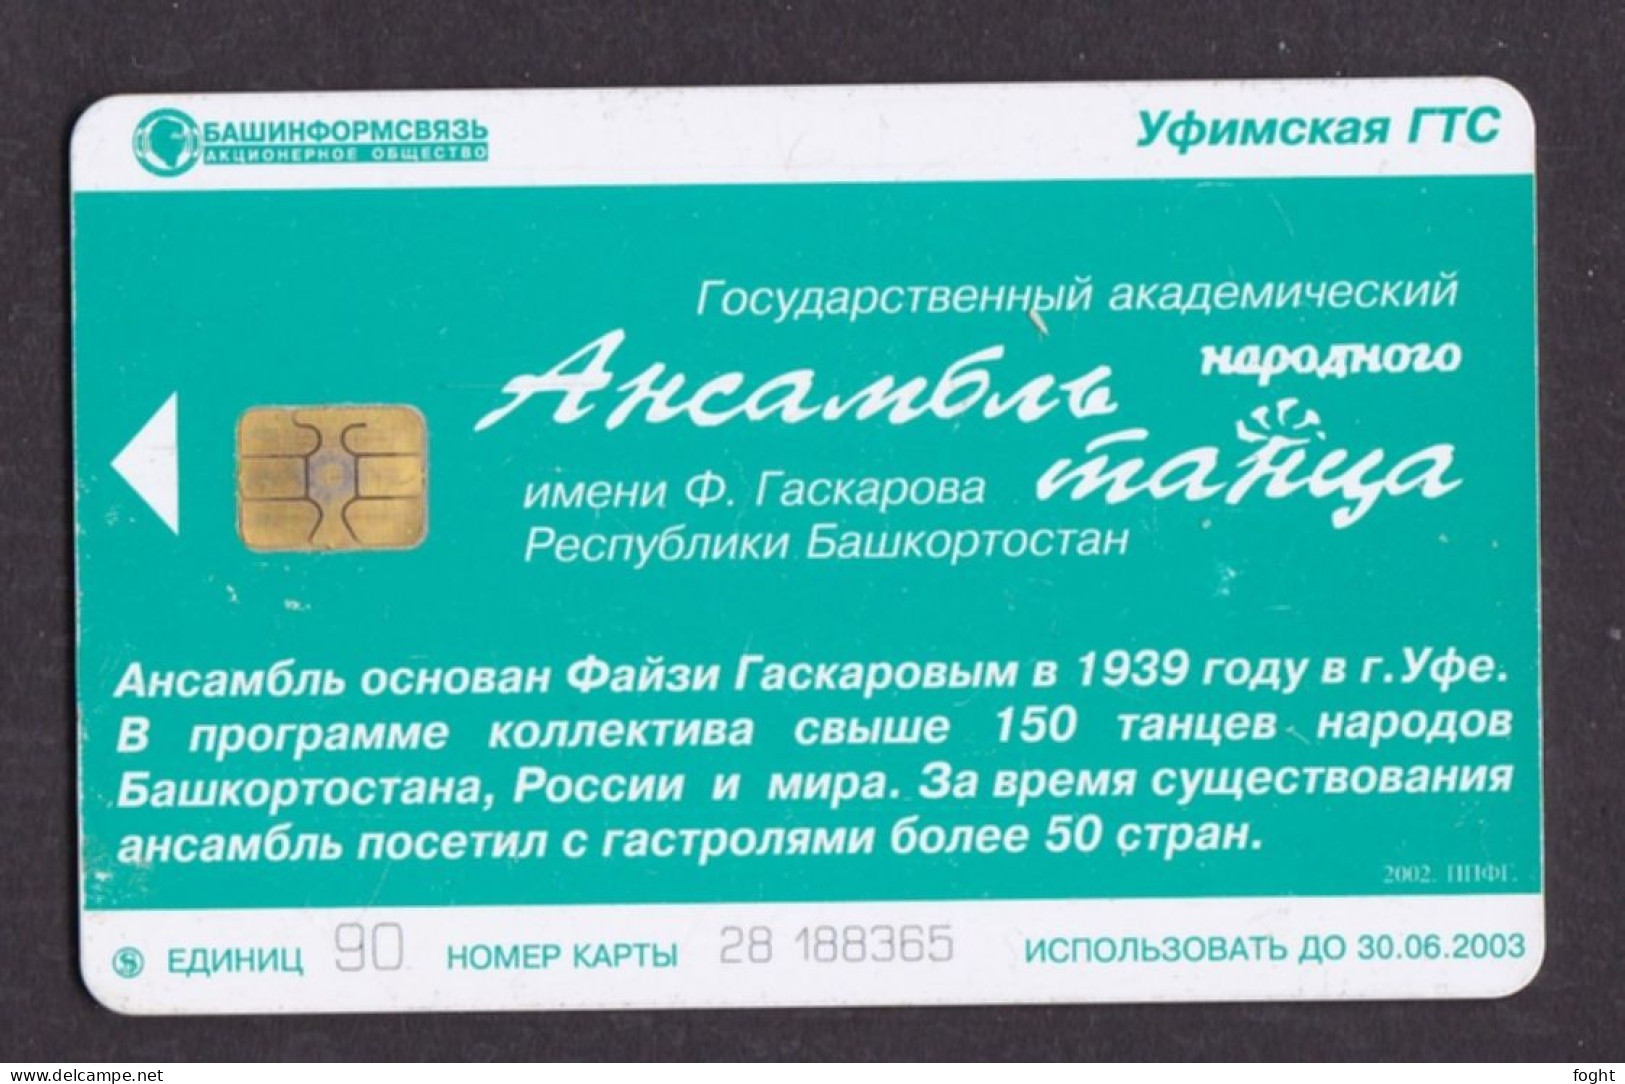 2002 Russia Bashinformsvyaz-Ufa,Tatar Dance "Bridegroom",90 Units Card,Col:RU-BIS-V-006 - Russland